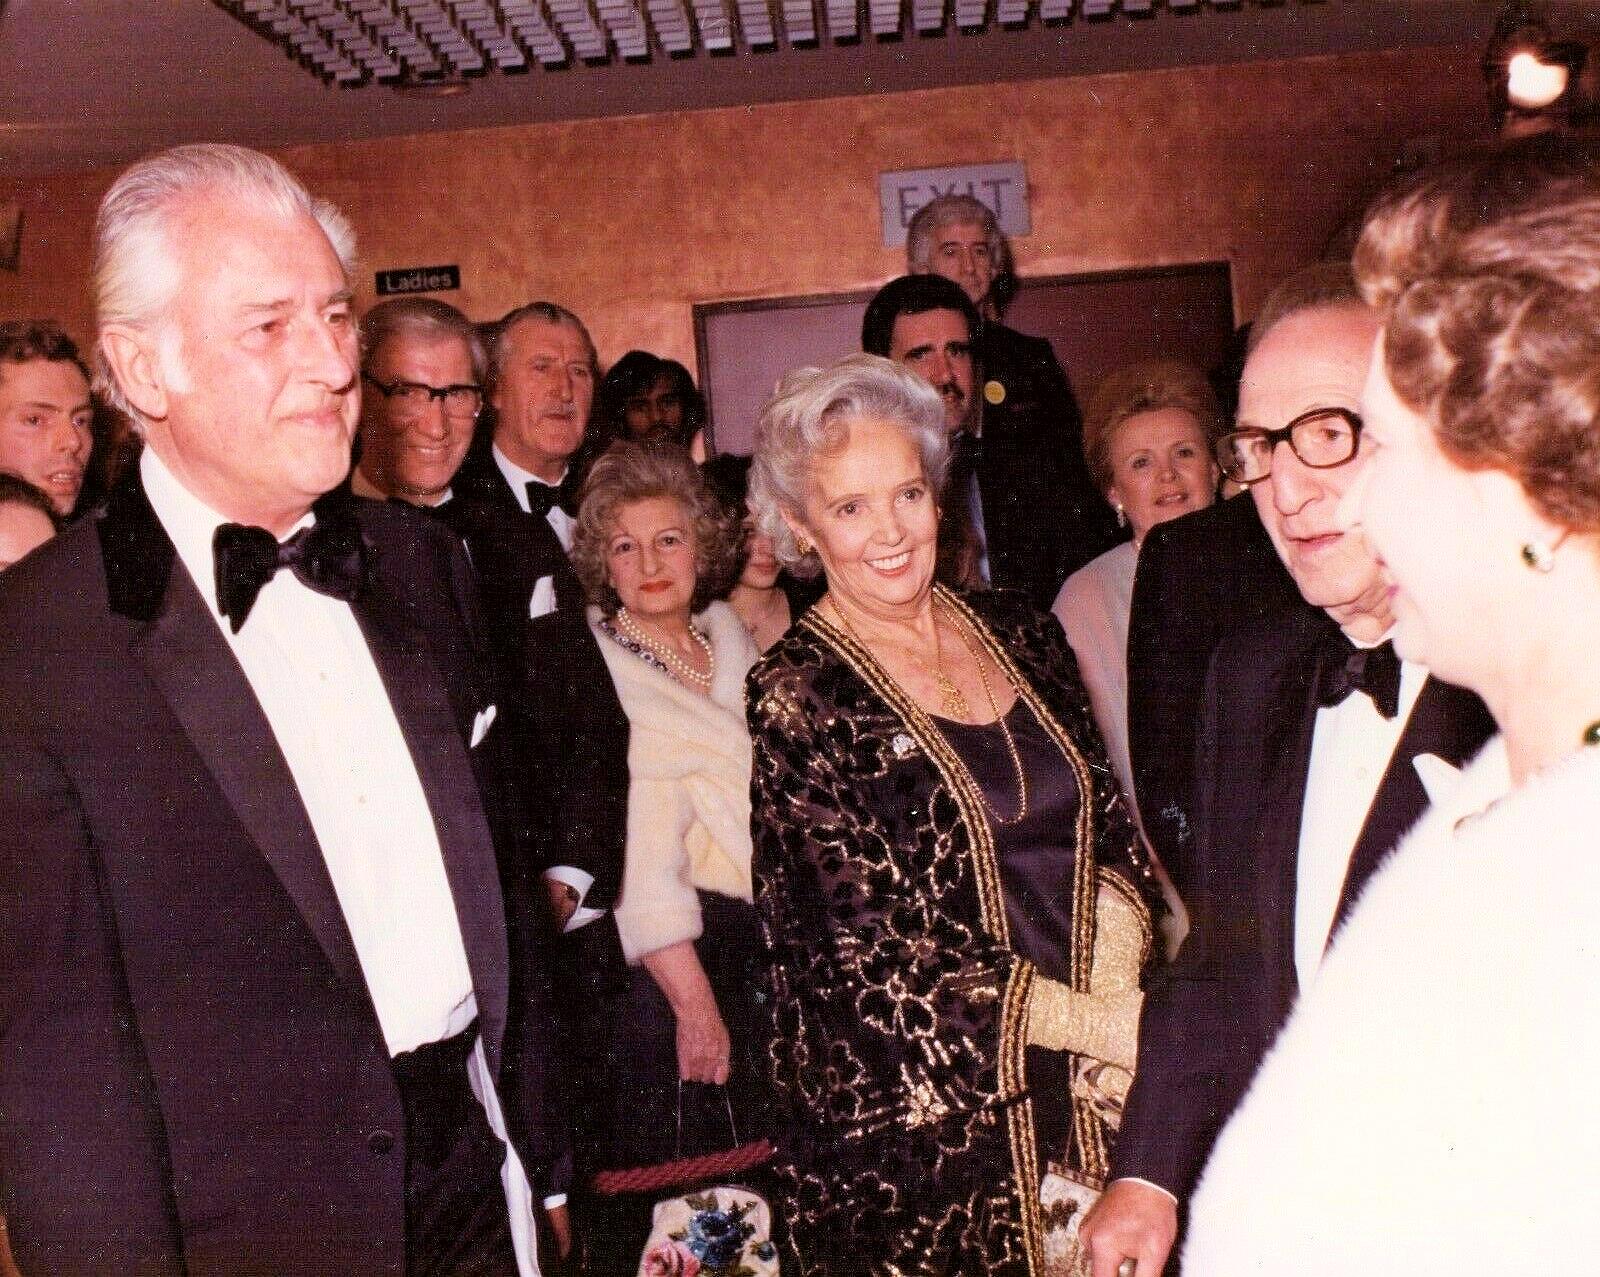 At the 1980 Royal Premiere in London of Kramer vs Kramer, Stewart Granger and Jessie Matthews are introduced to HRH Queen Elizabeth II